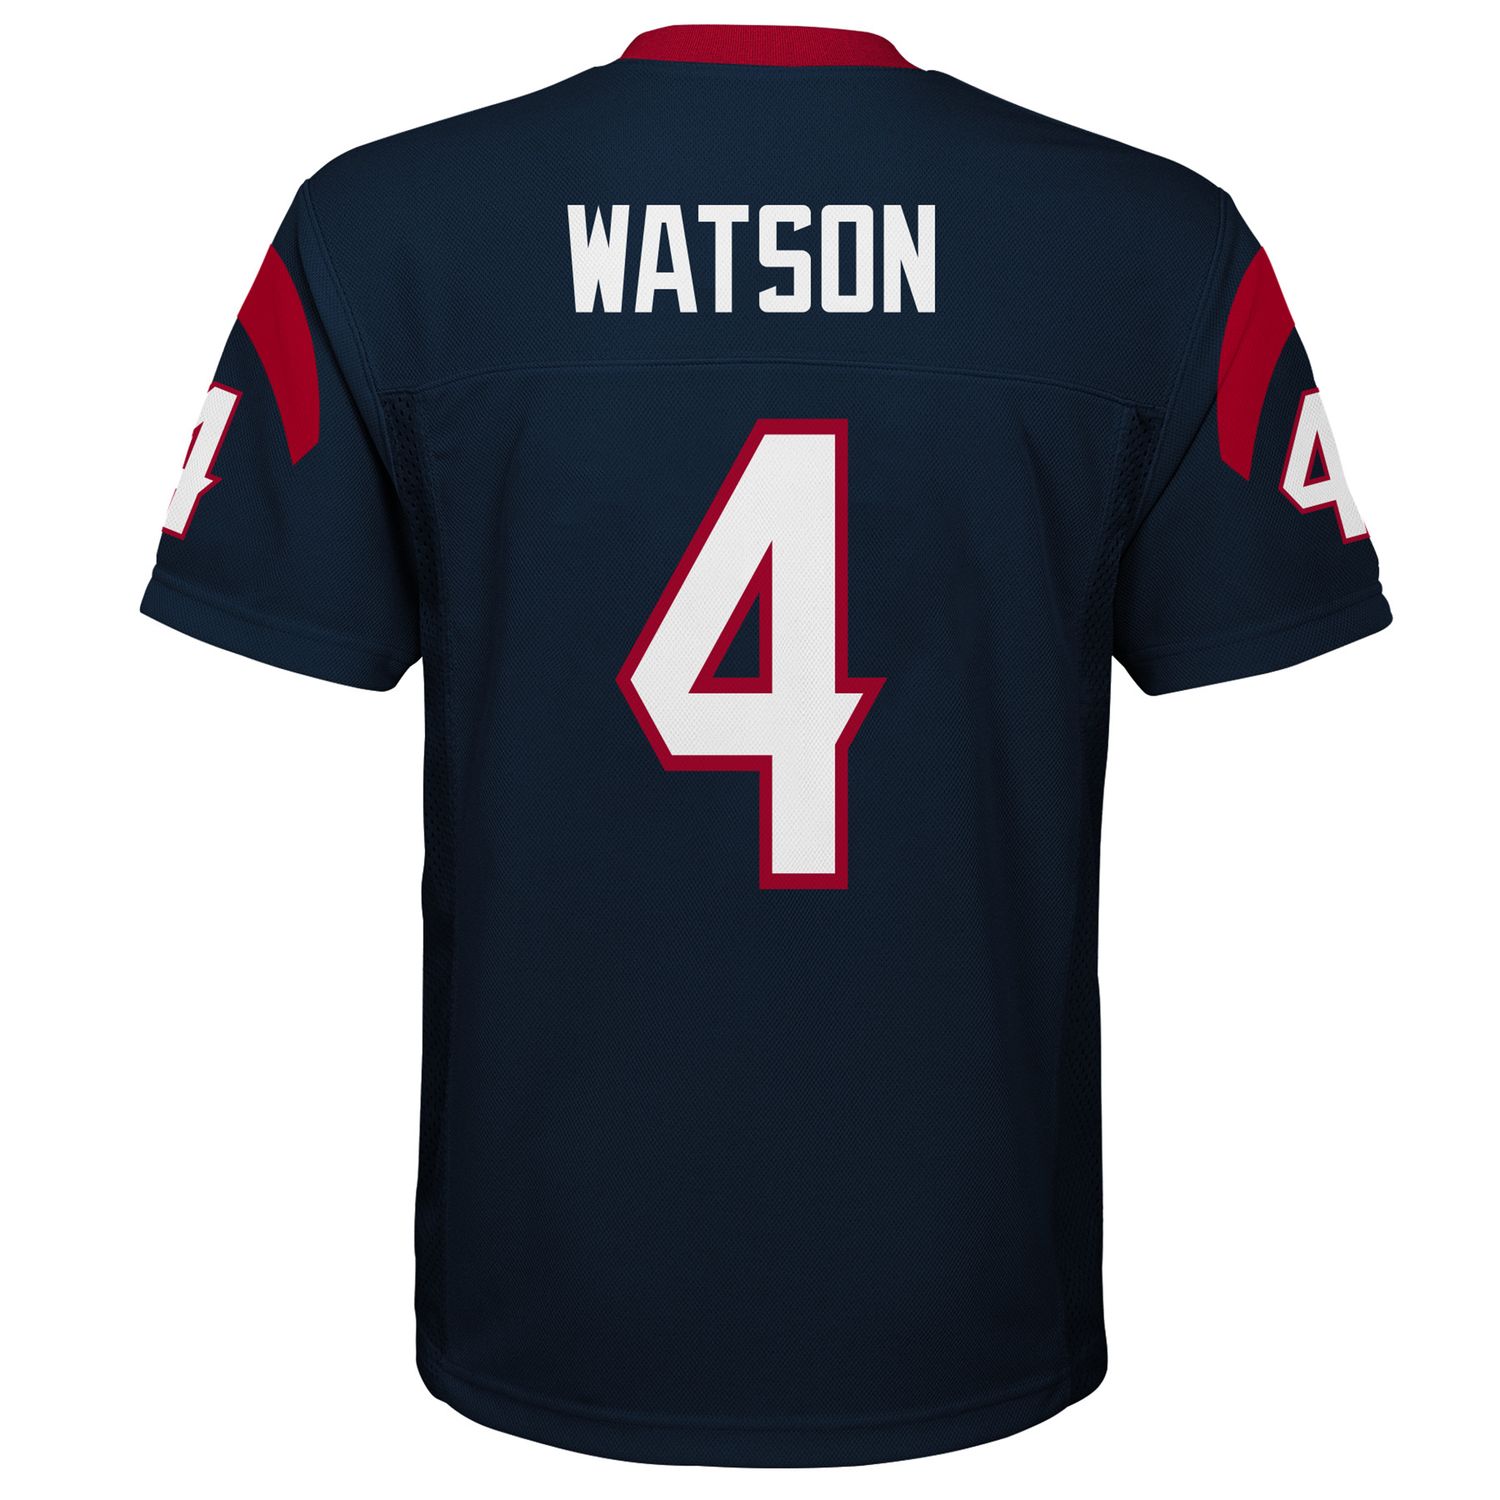 watson jersey number